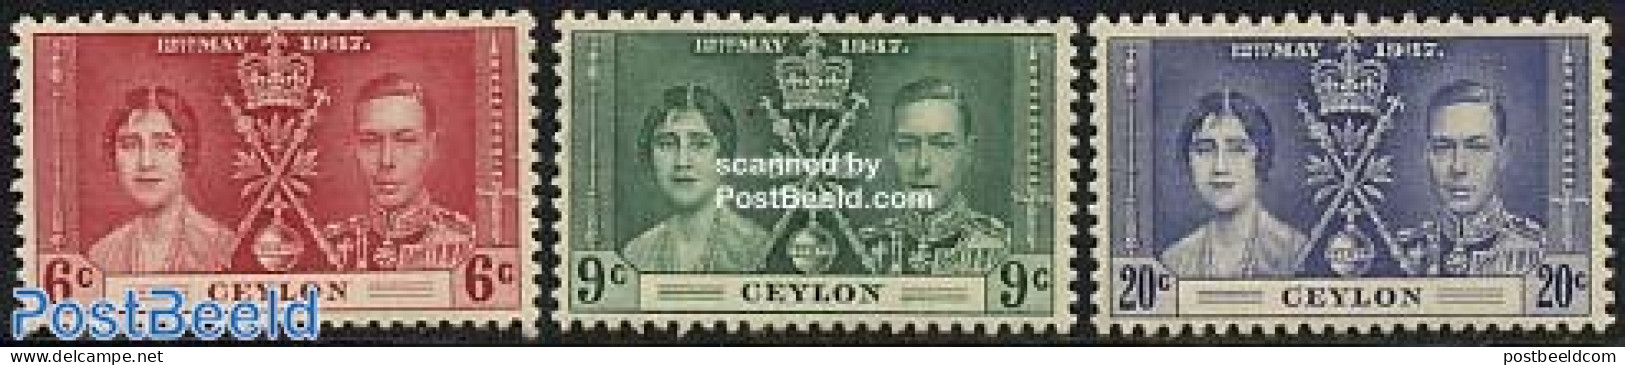 Sri Lanka (Ceylon) 1937 Coronation 3v, Mint NH, History - Kings & Queens (Royalty) - Royalties, Royals